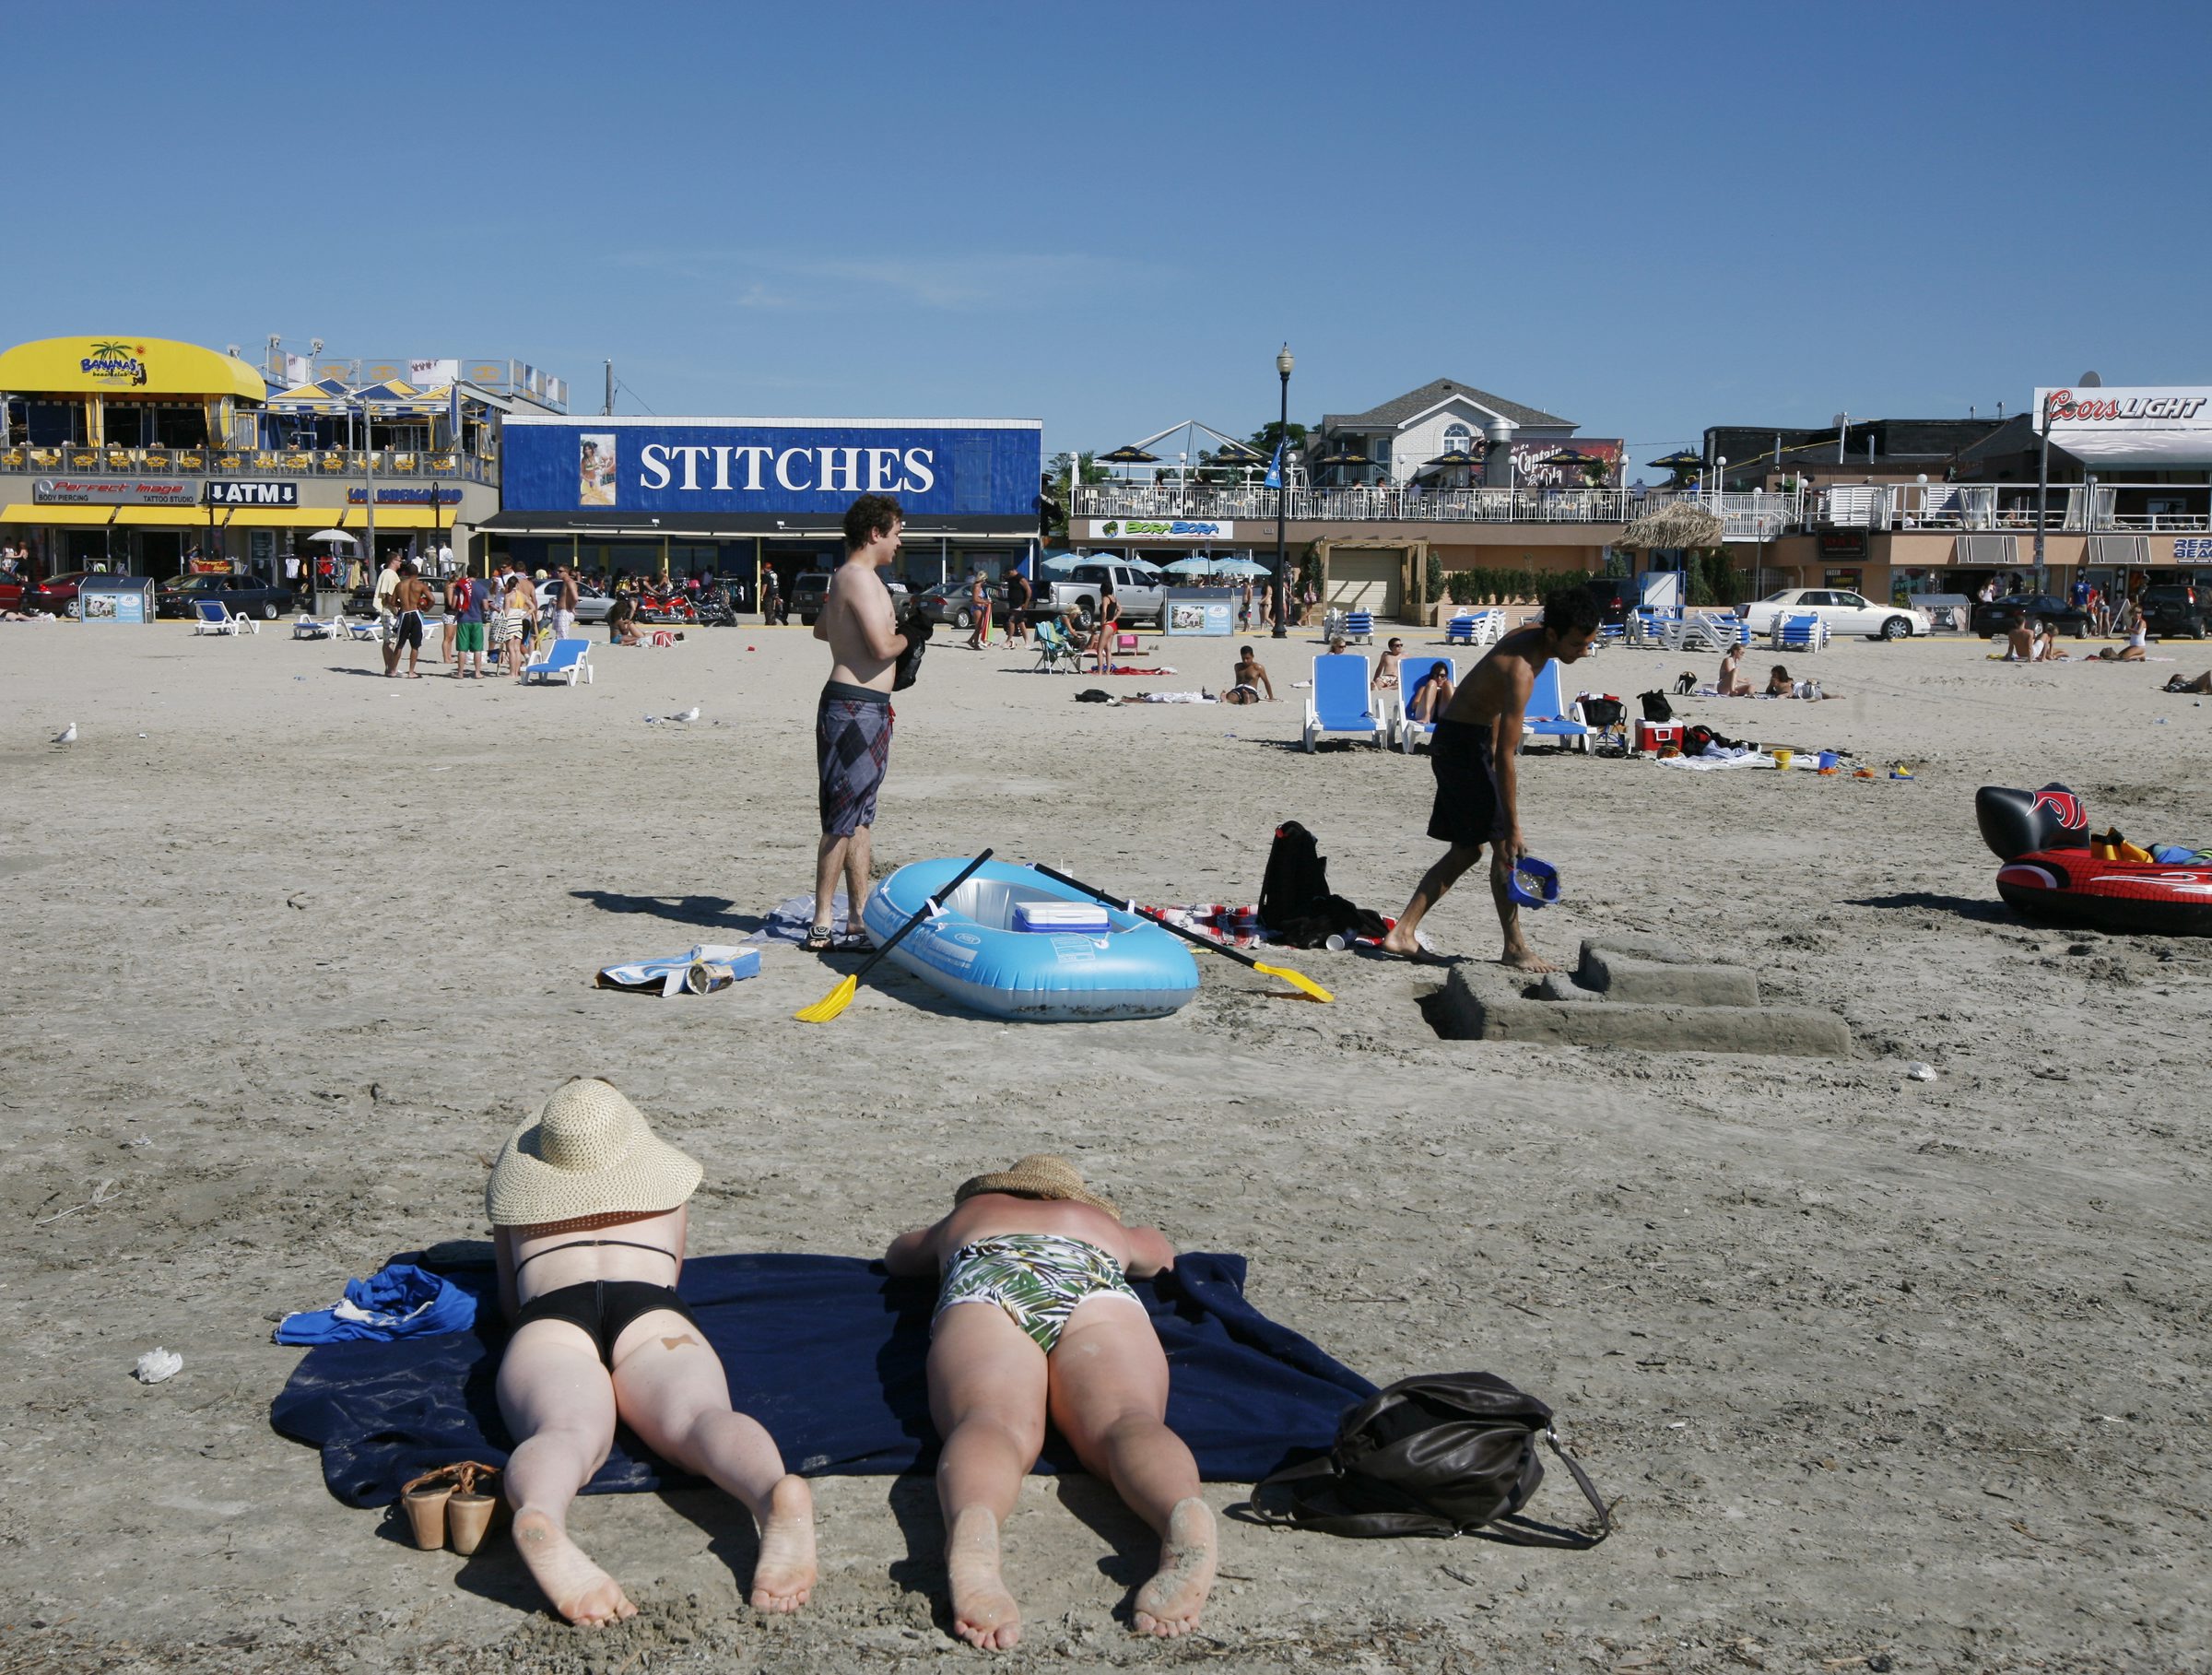 Poop on the beach? Ontario mayor slams social media ‘misinformation’